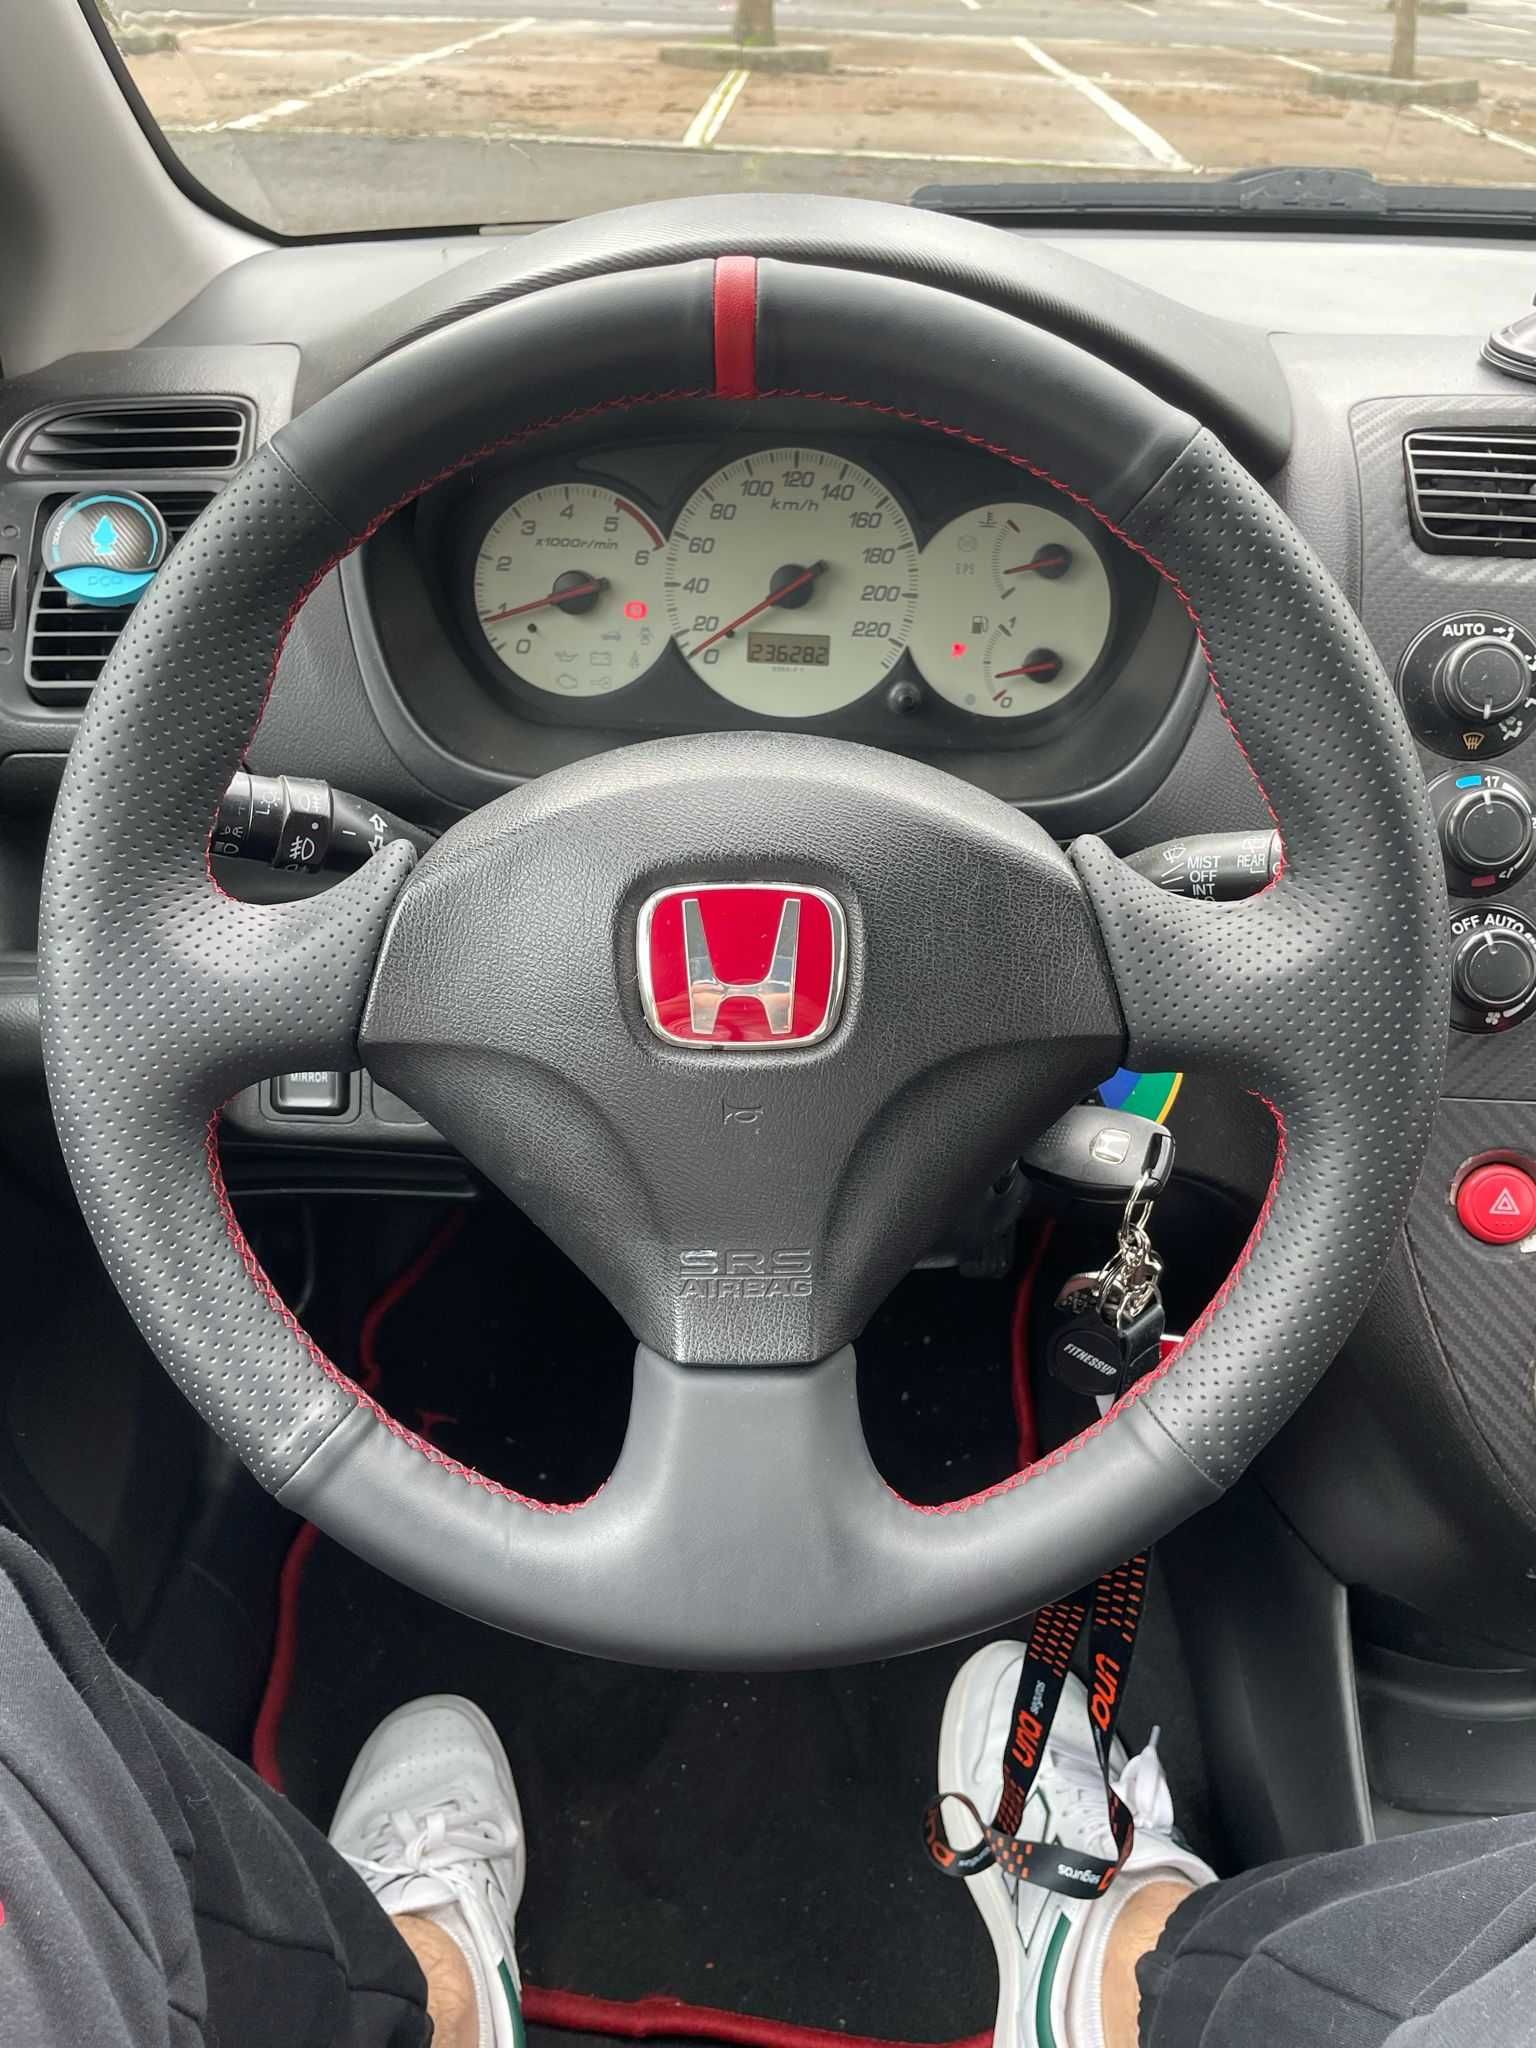 Honda Civic EP4 237kms